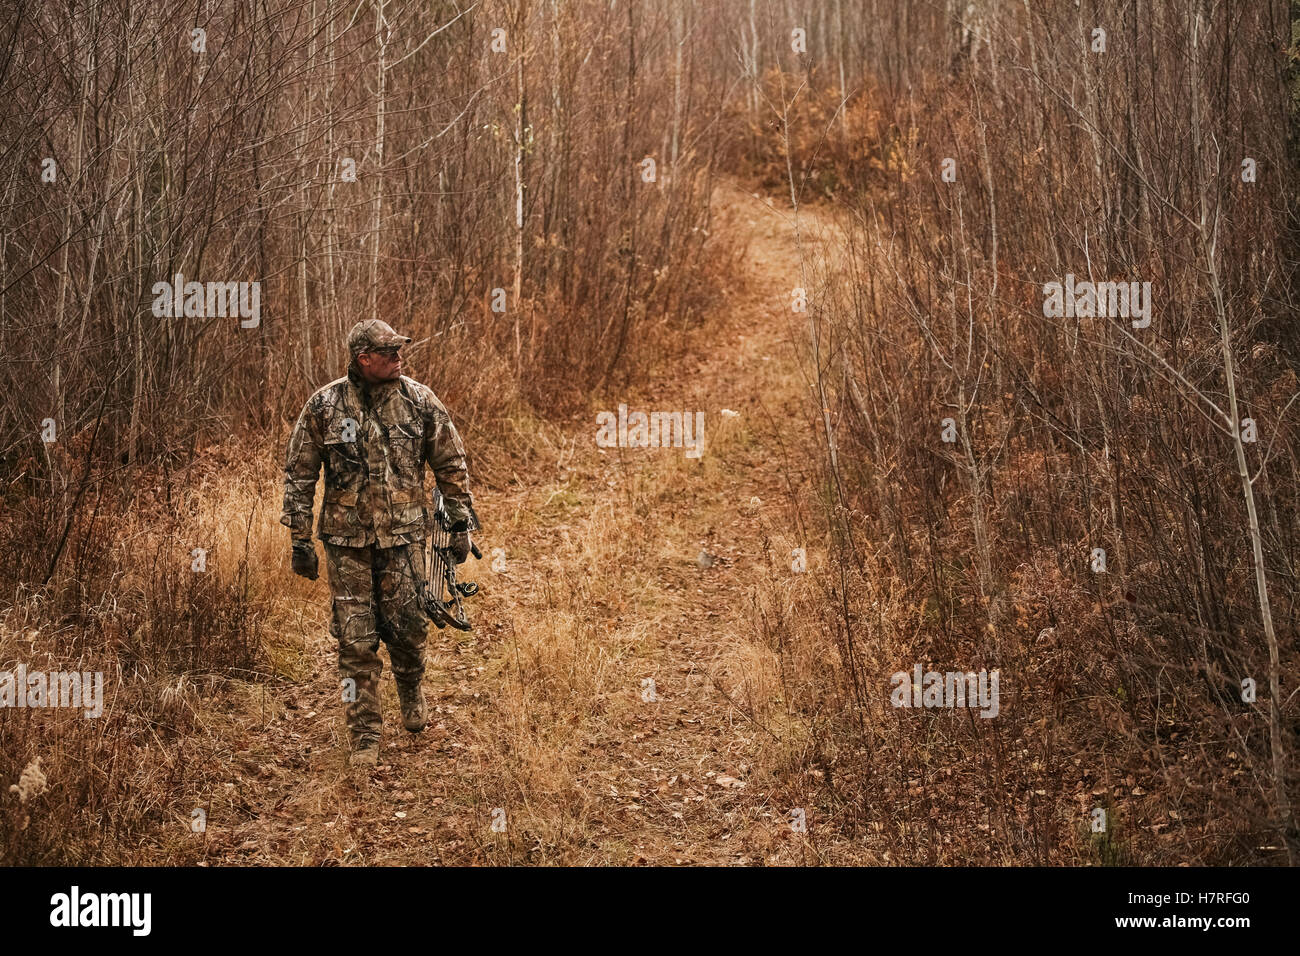 Bowhunter ground stalking turkey while walking on old logging trail Stock Photo